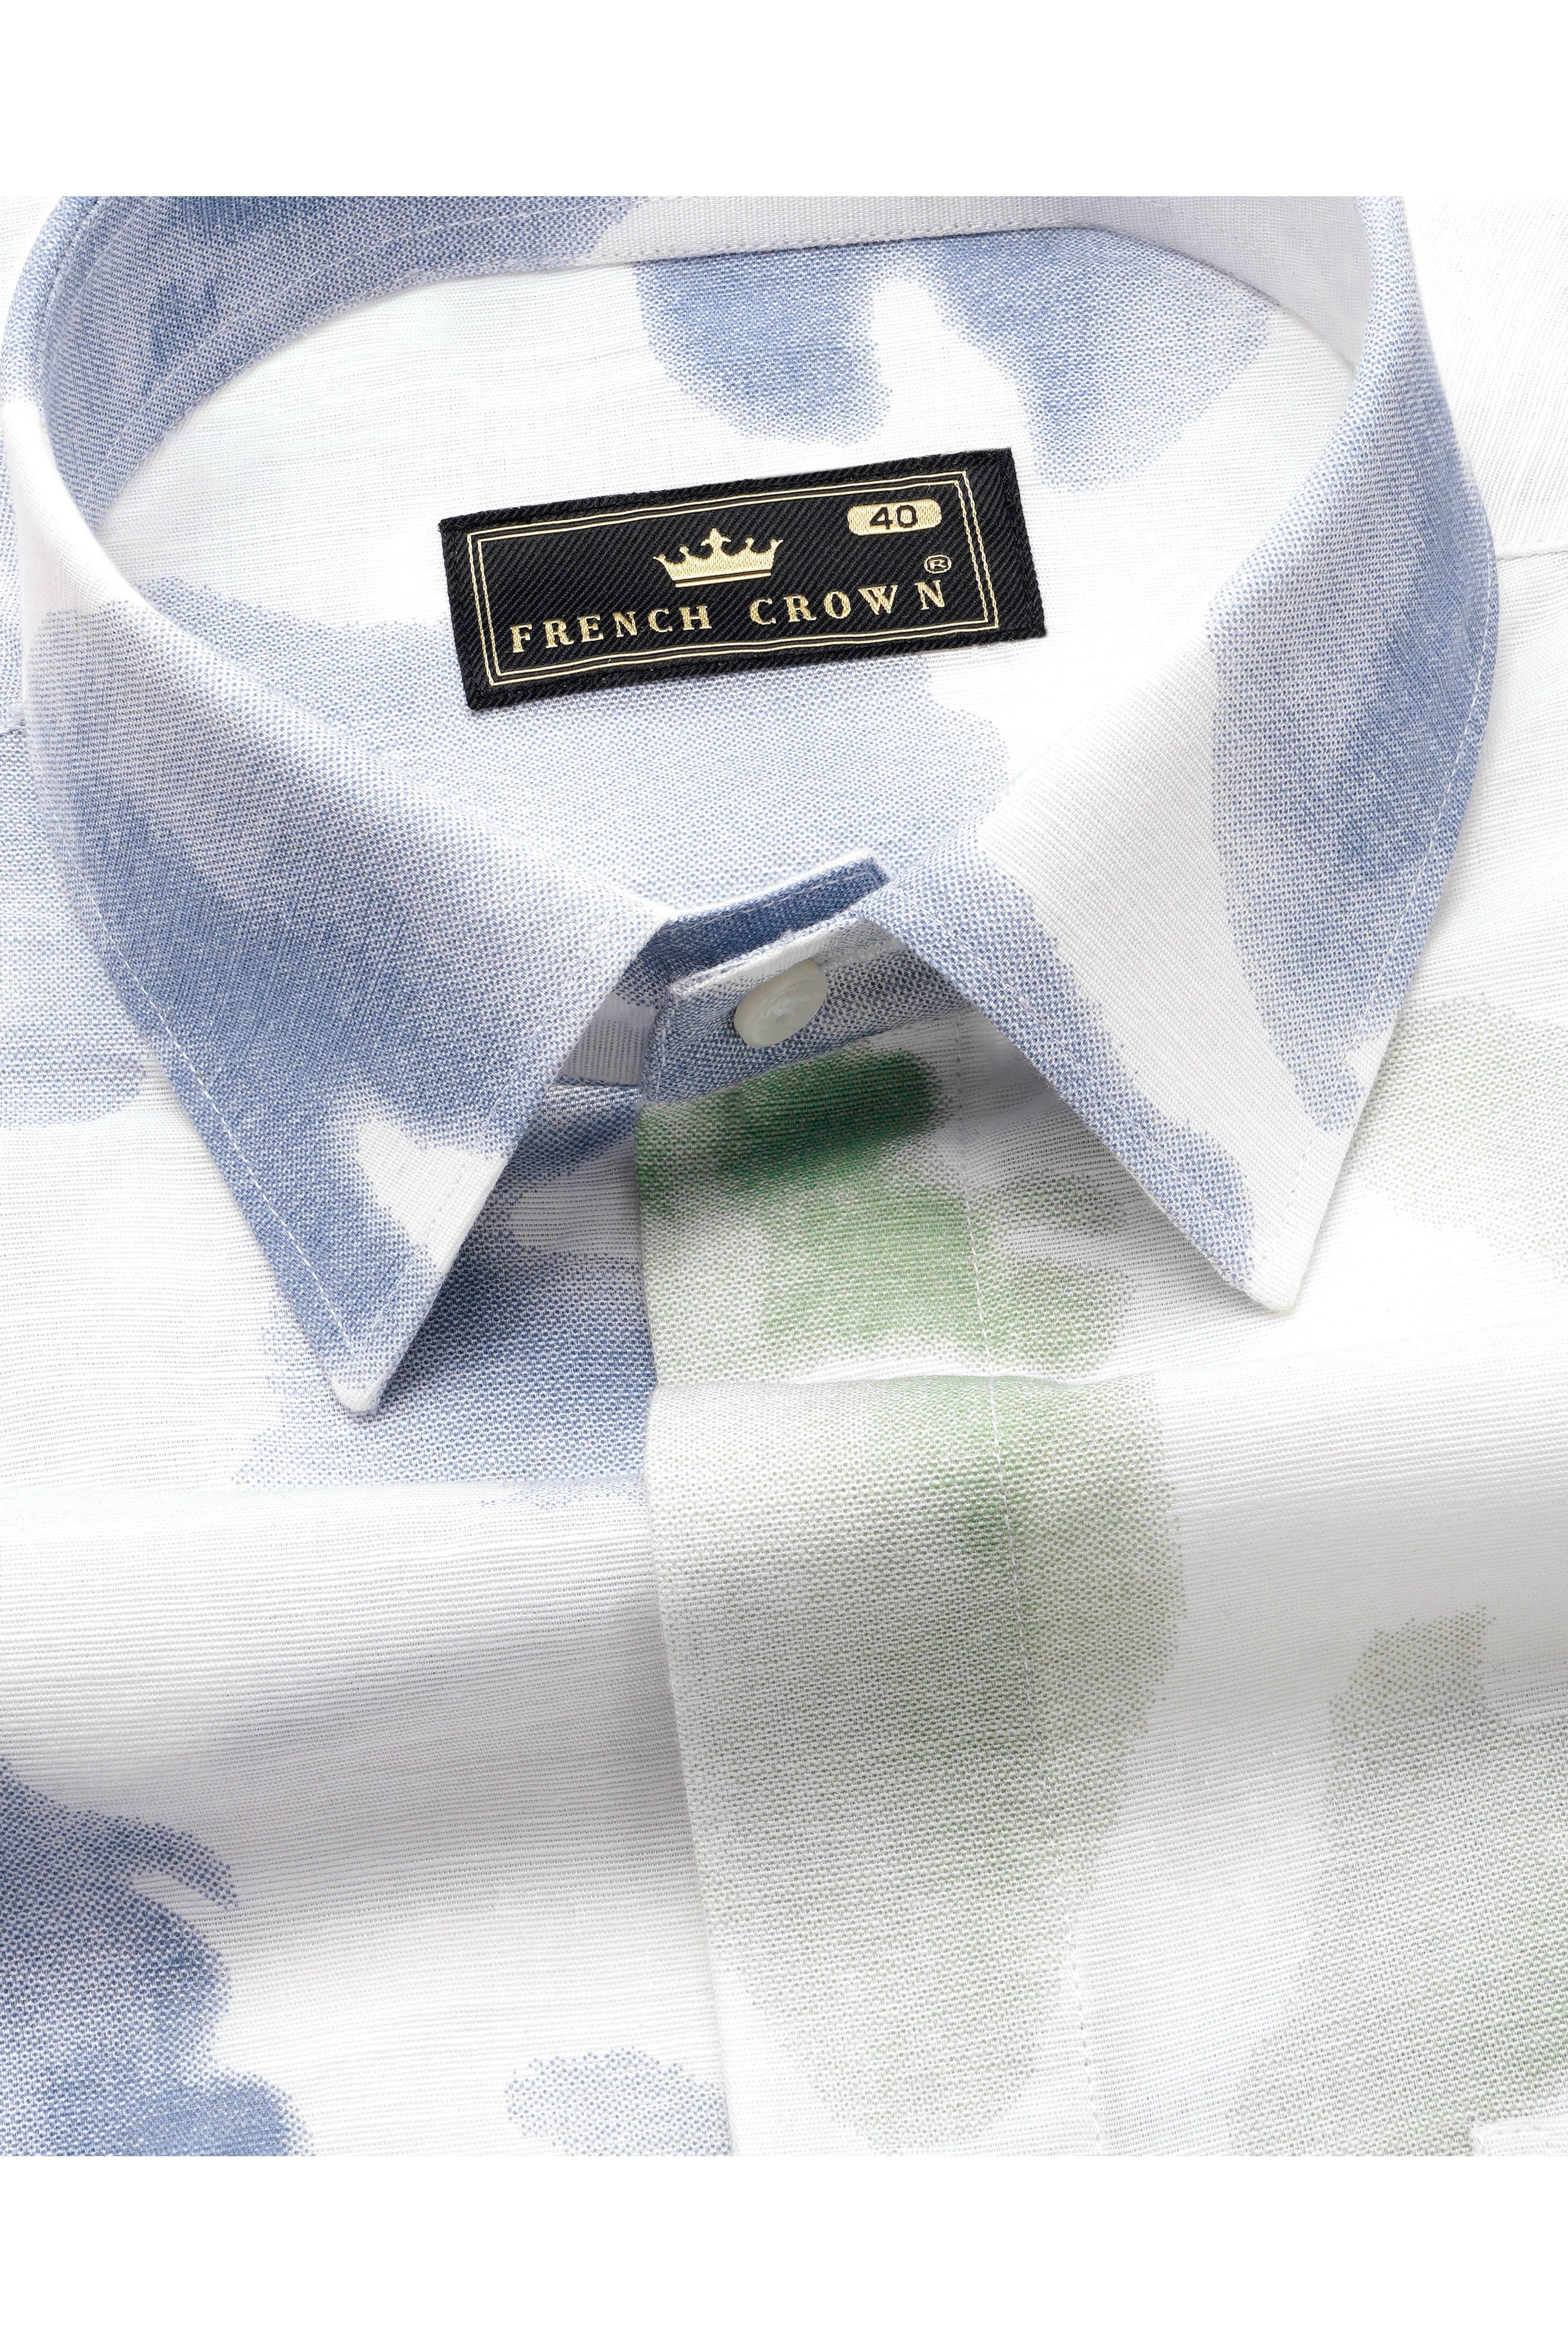 Bright White Marble Printed Luxurious Linen Designer Shirt